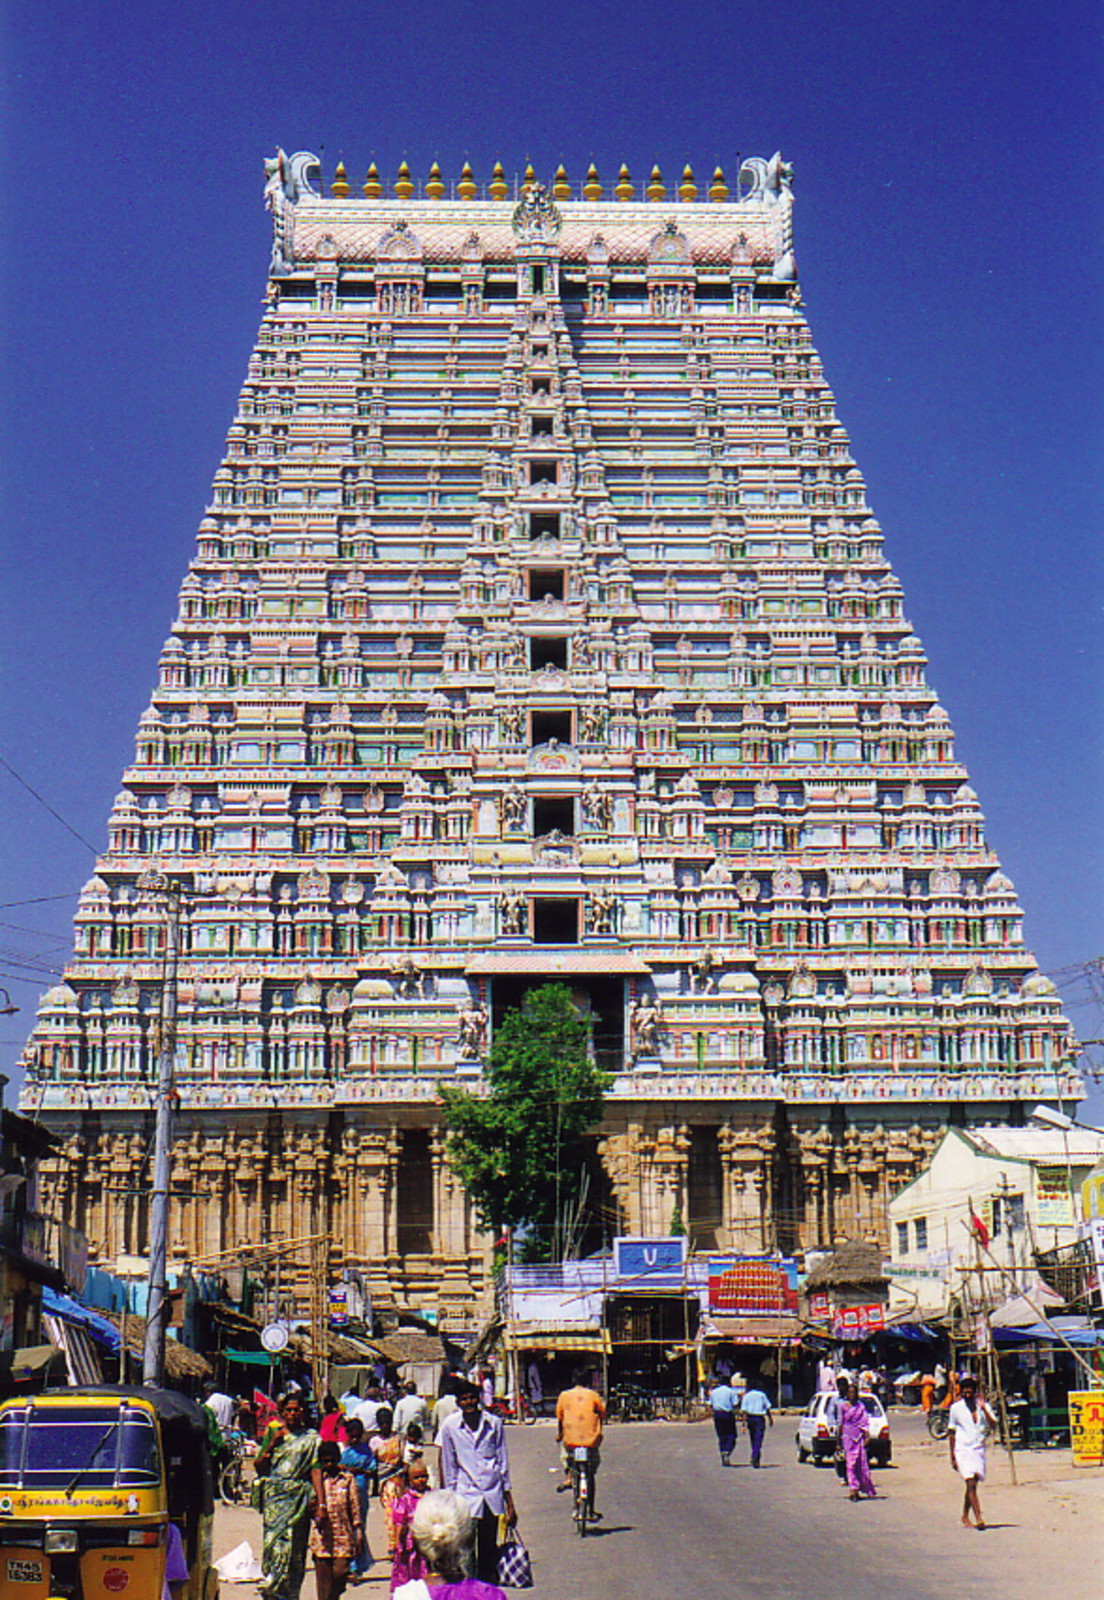 A magnificent gopuram in Sri Ranganathaswamy Temple